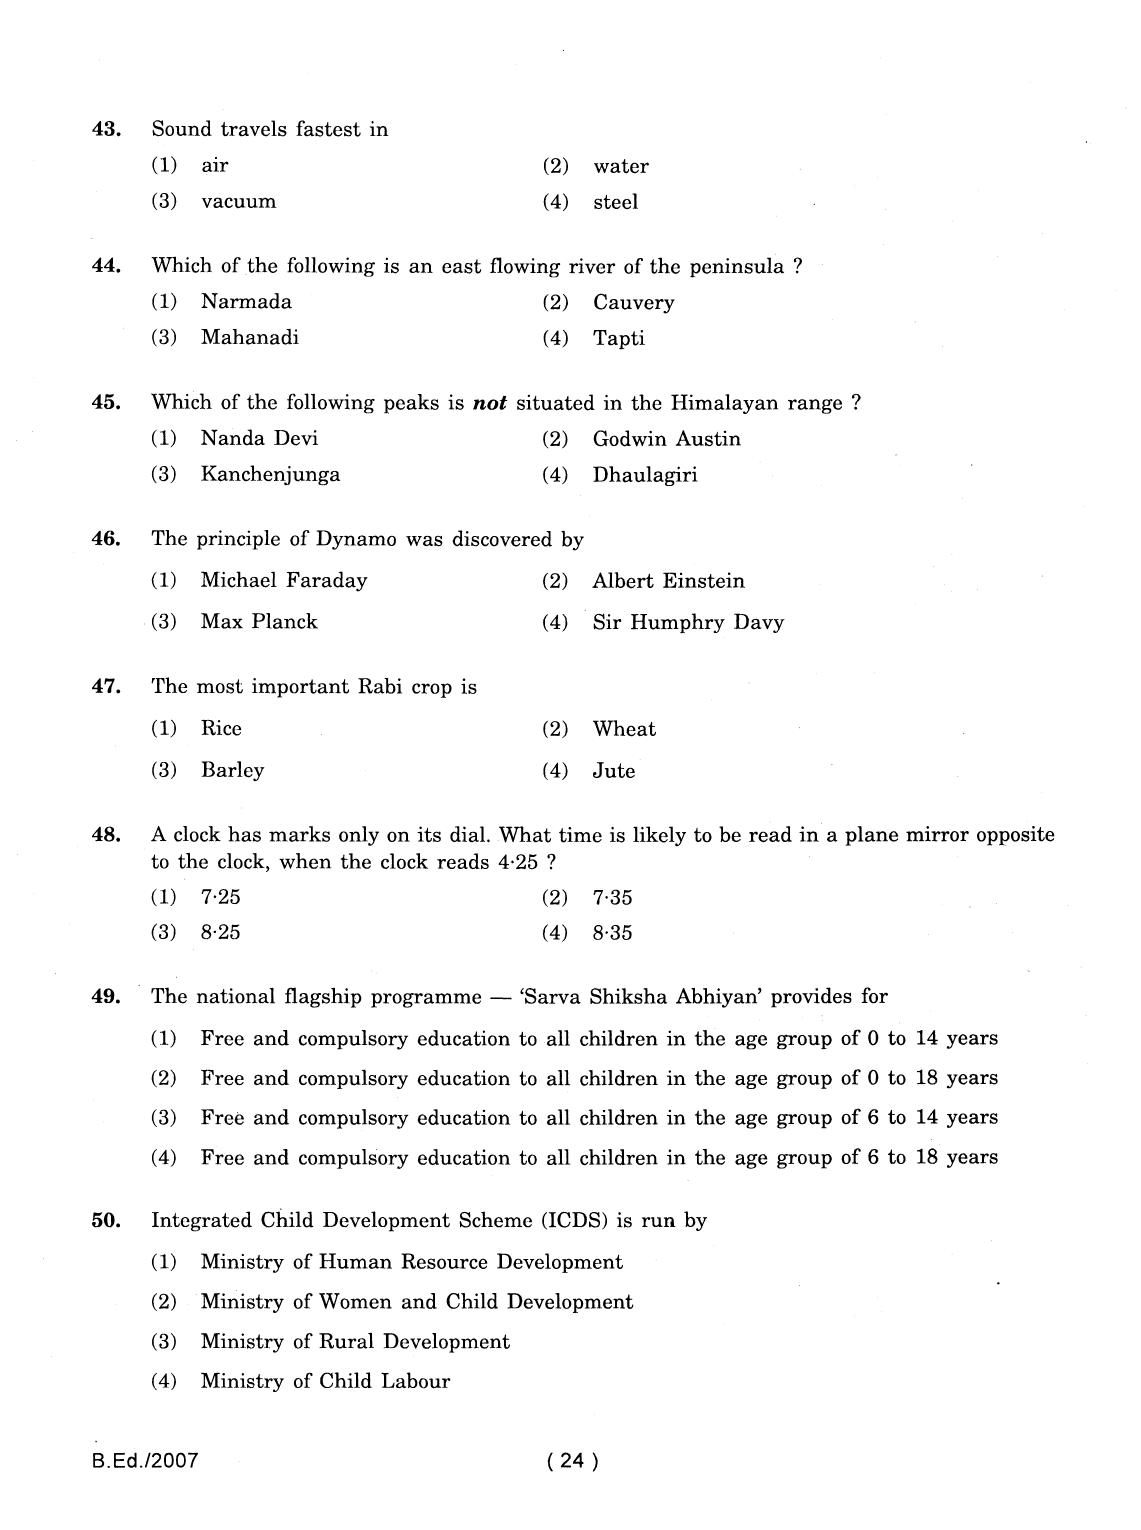 IGNOU B.Ed 2007 Question Paper - Page 24